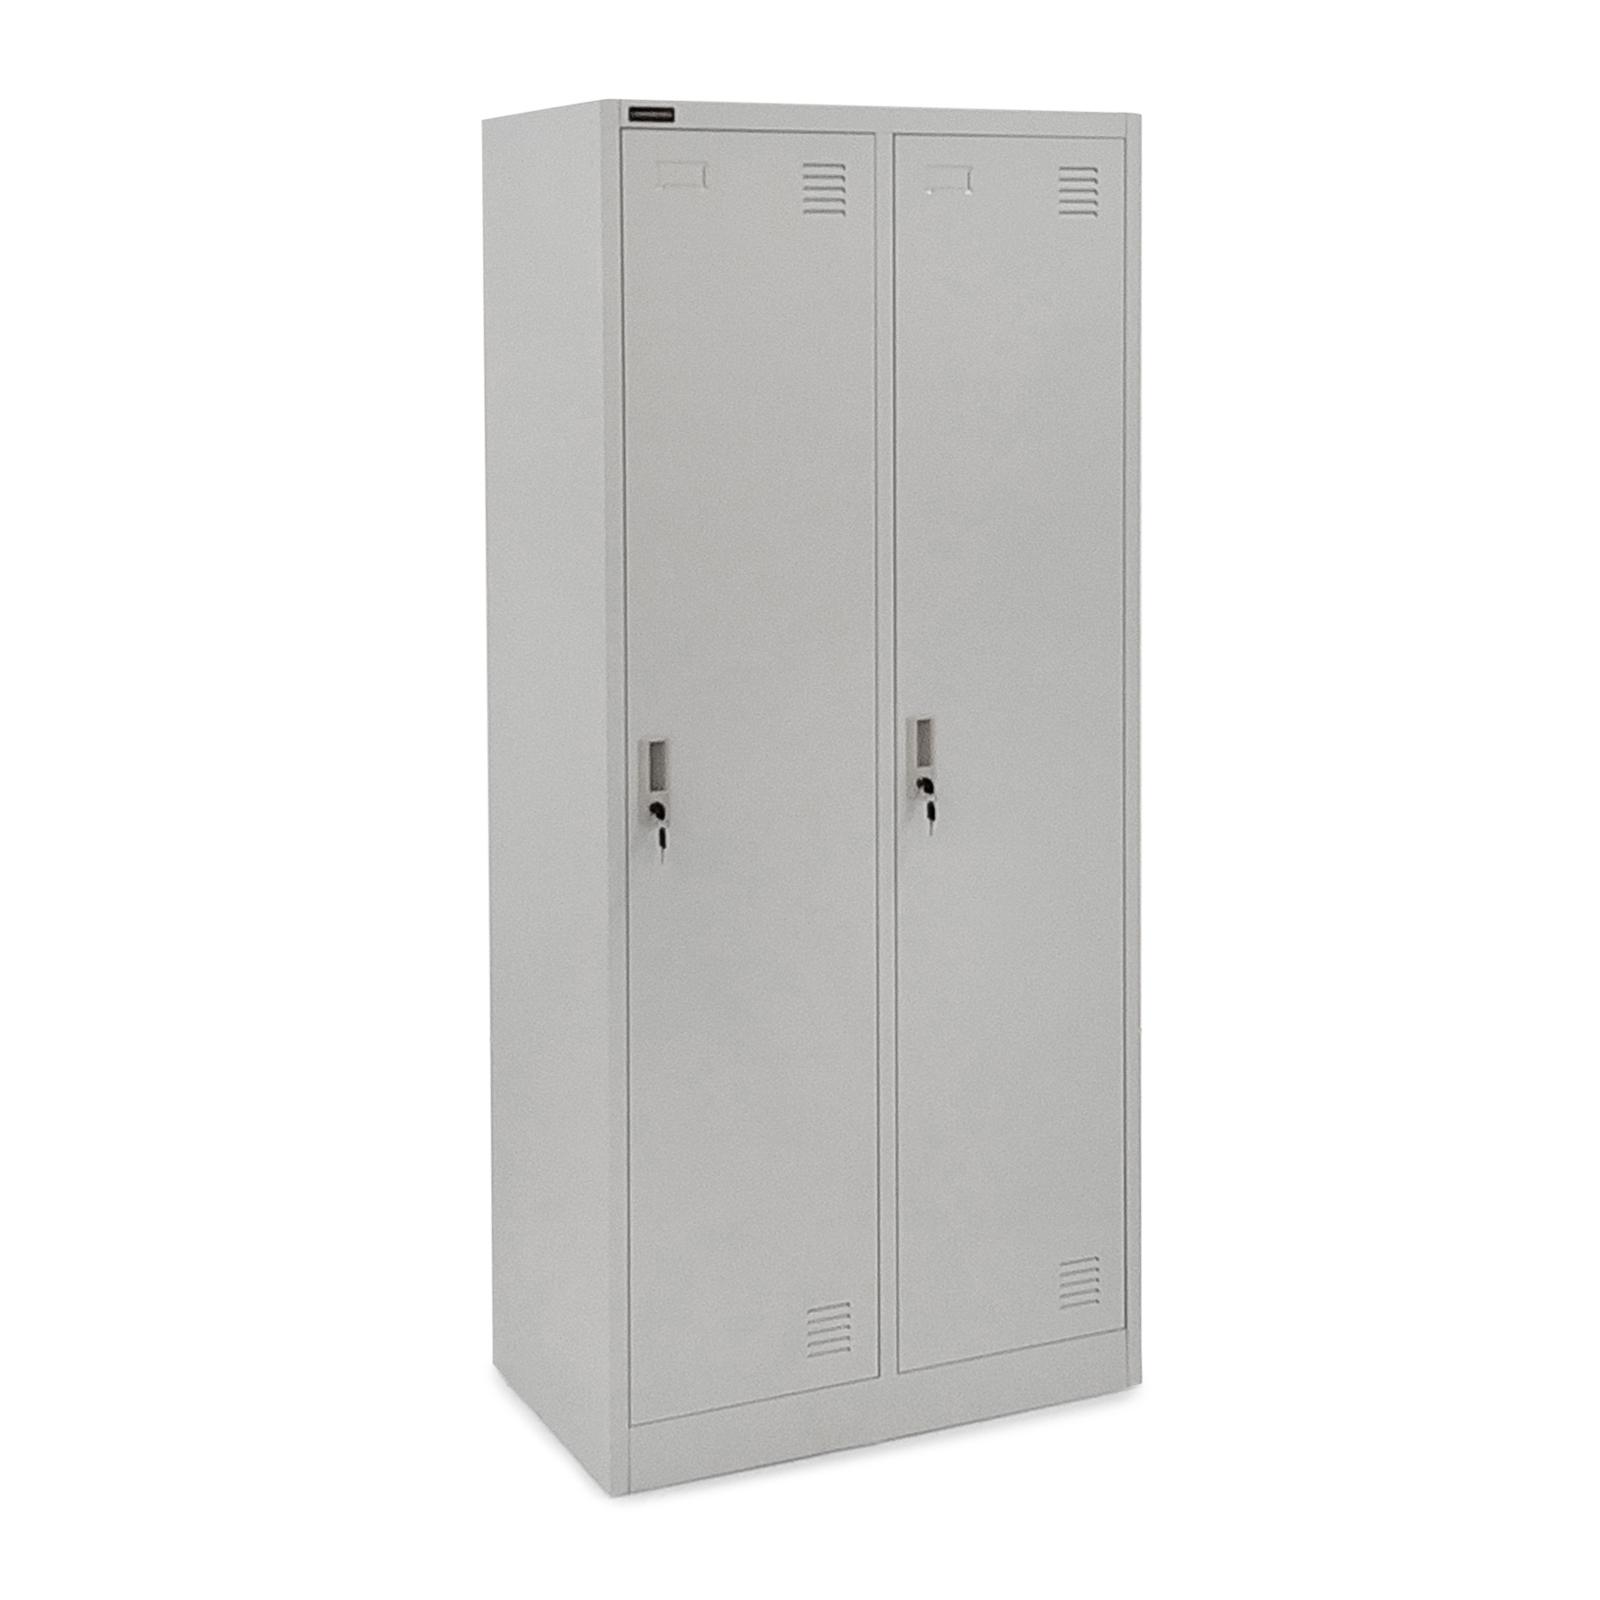 Locker - 2 compartments - lockable